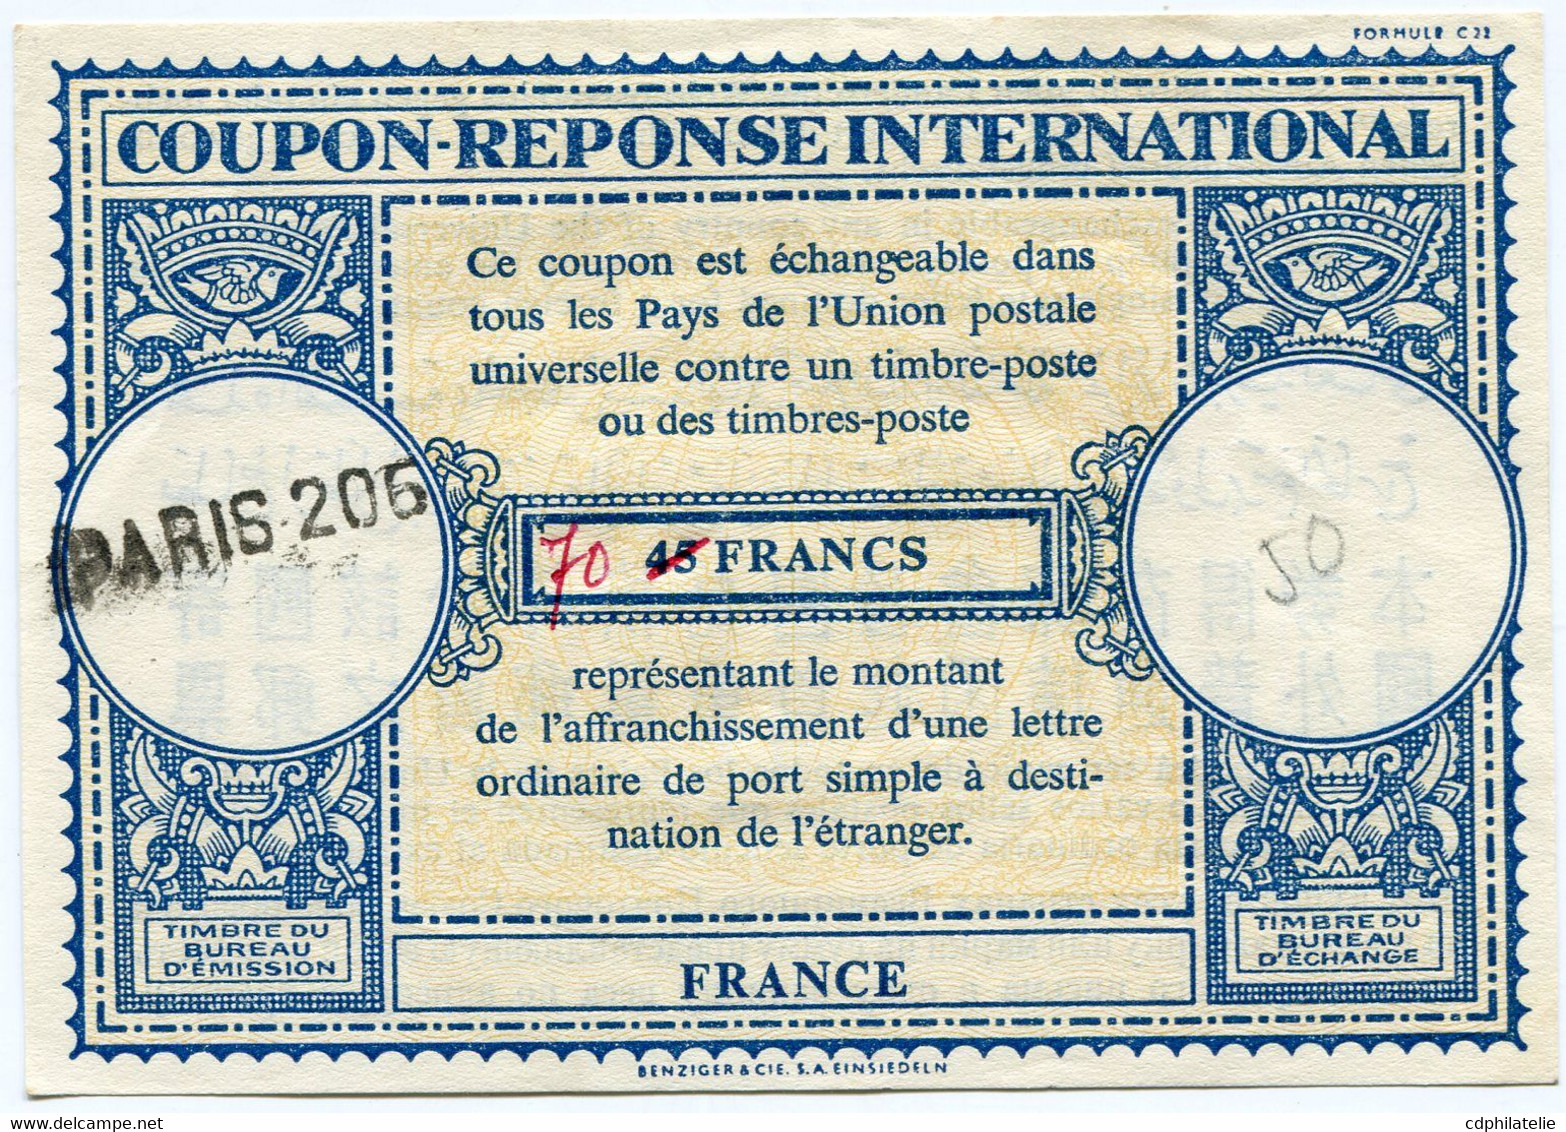 FRANCE COUPON-REPONSE INTERNATIONAL DE 45 FRANCS AVEC MODIFICATION MANUSCRITE DE TARIF 70 FRANCS AVEC OBL PARIS 206 - Buoni Risposte